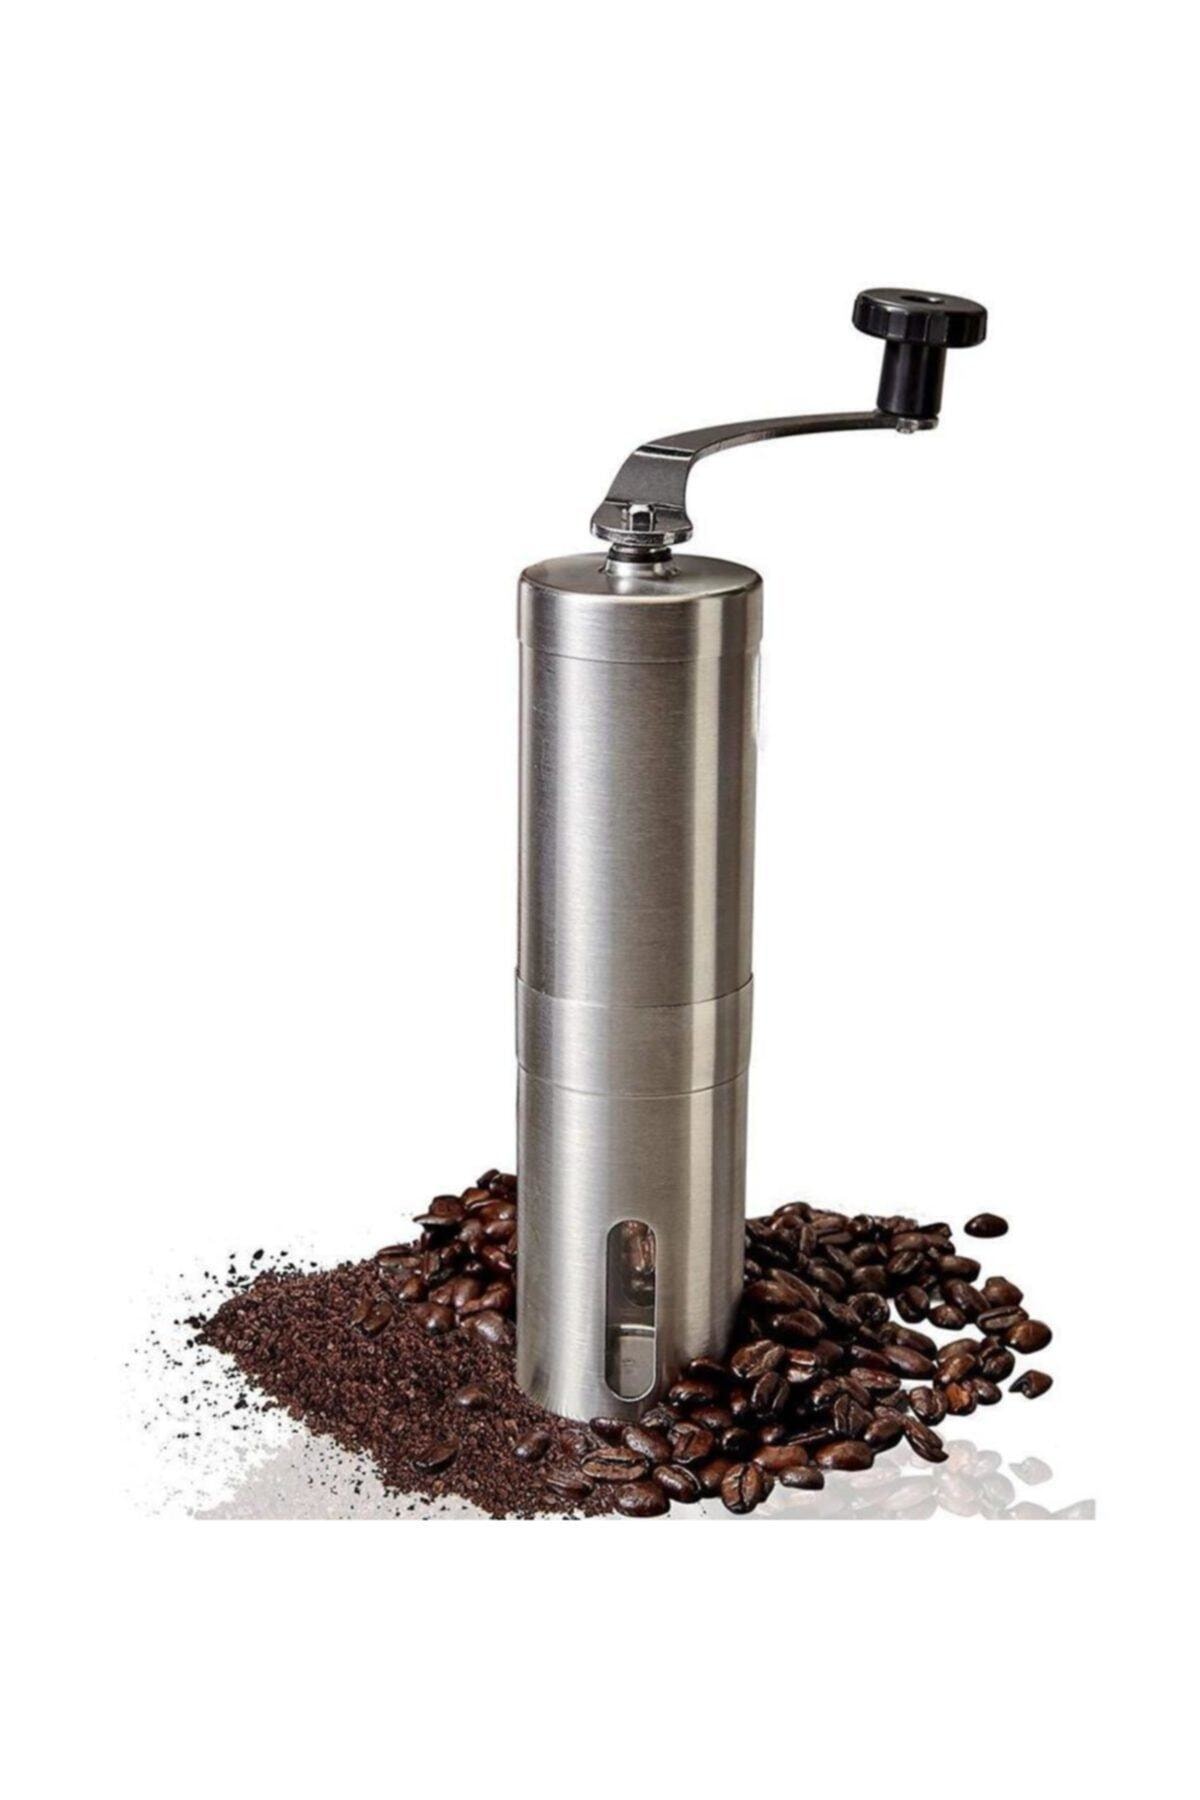 Mini Coffee Grinder Hand Grinder Stainless Steel